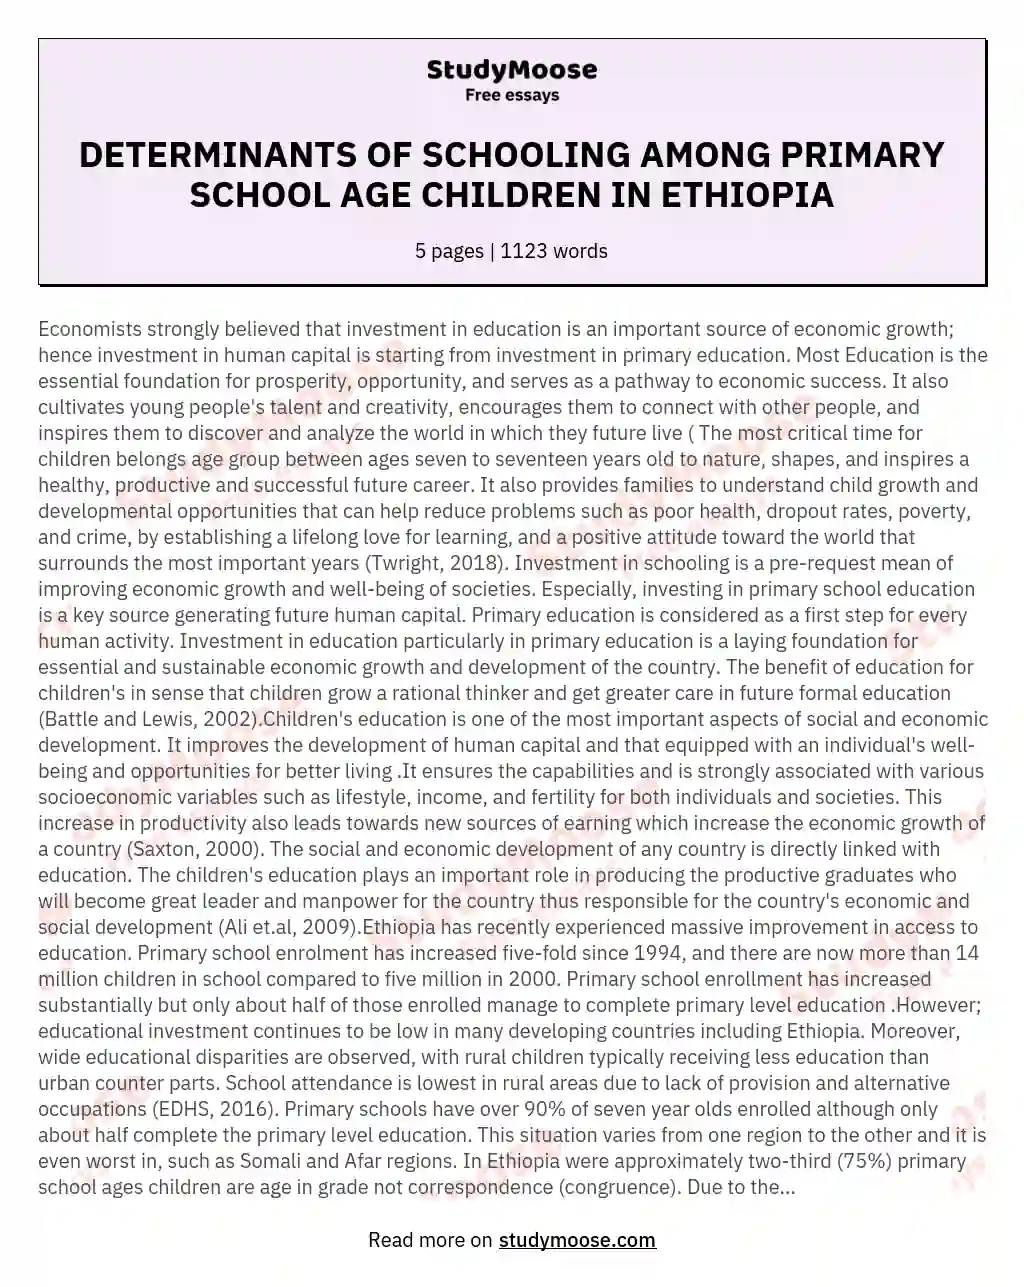 DETERMINANTS OF SCHOOLING AMONG PRIMARY SCHOOL AGE CHILDREN IN ETHIOPIA essay